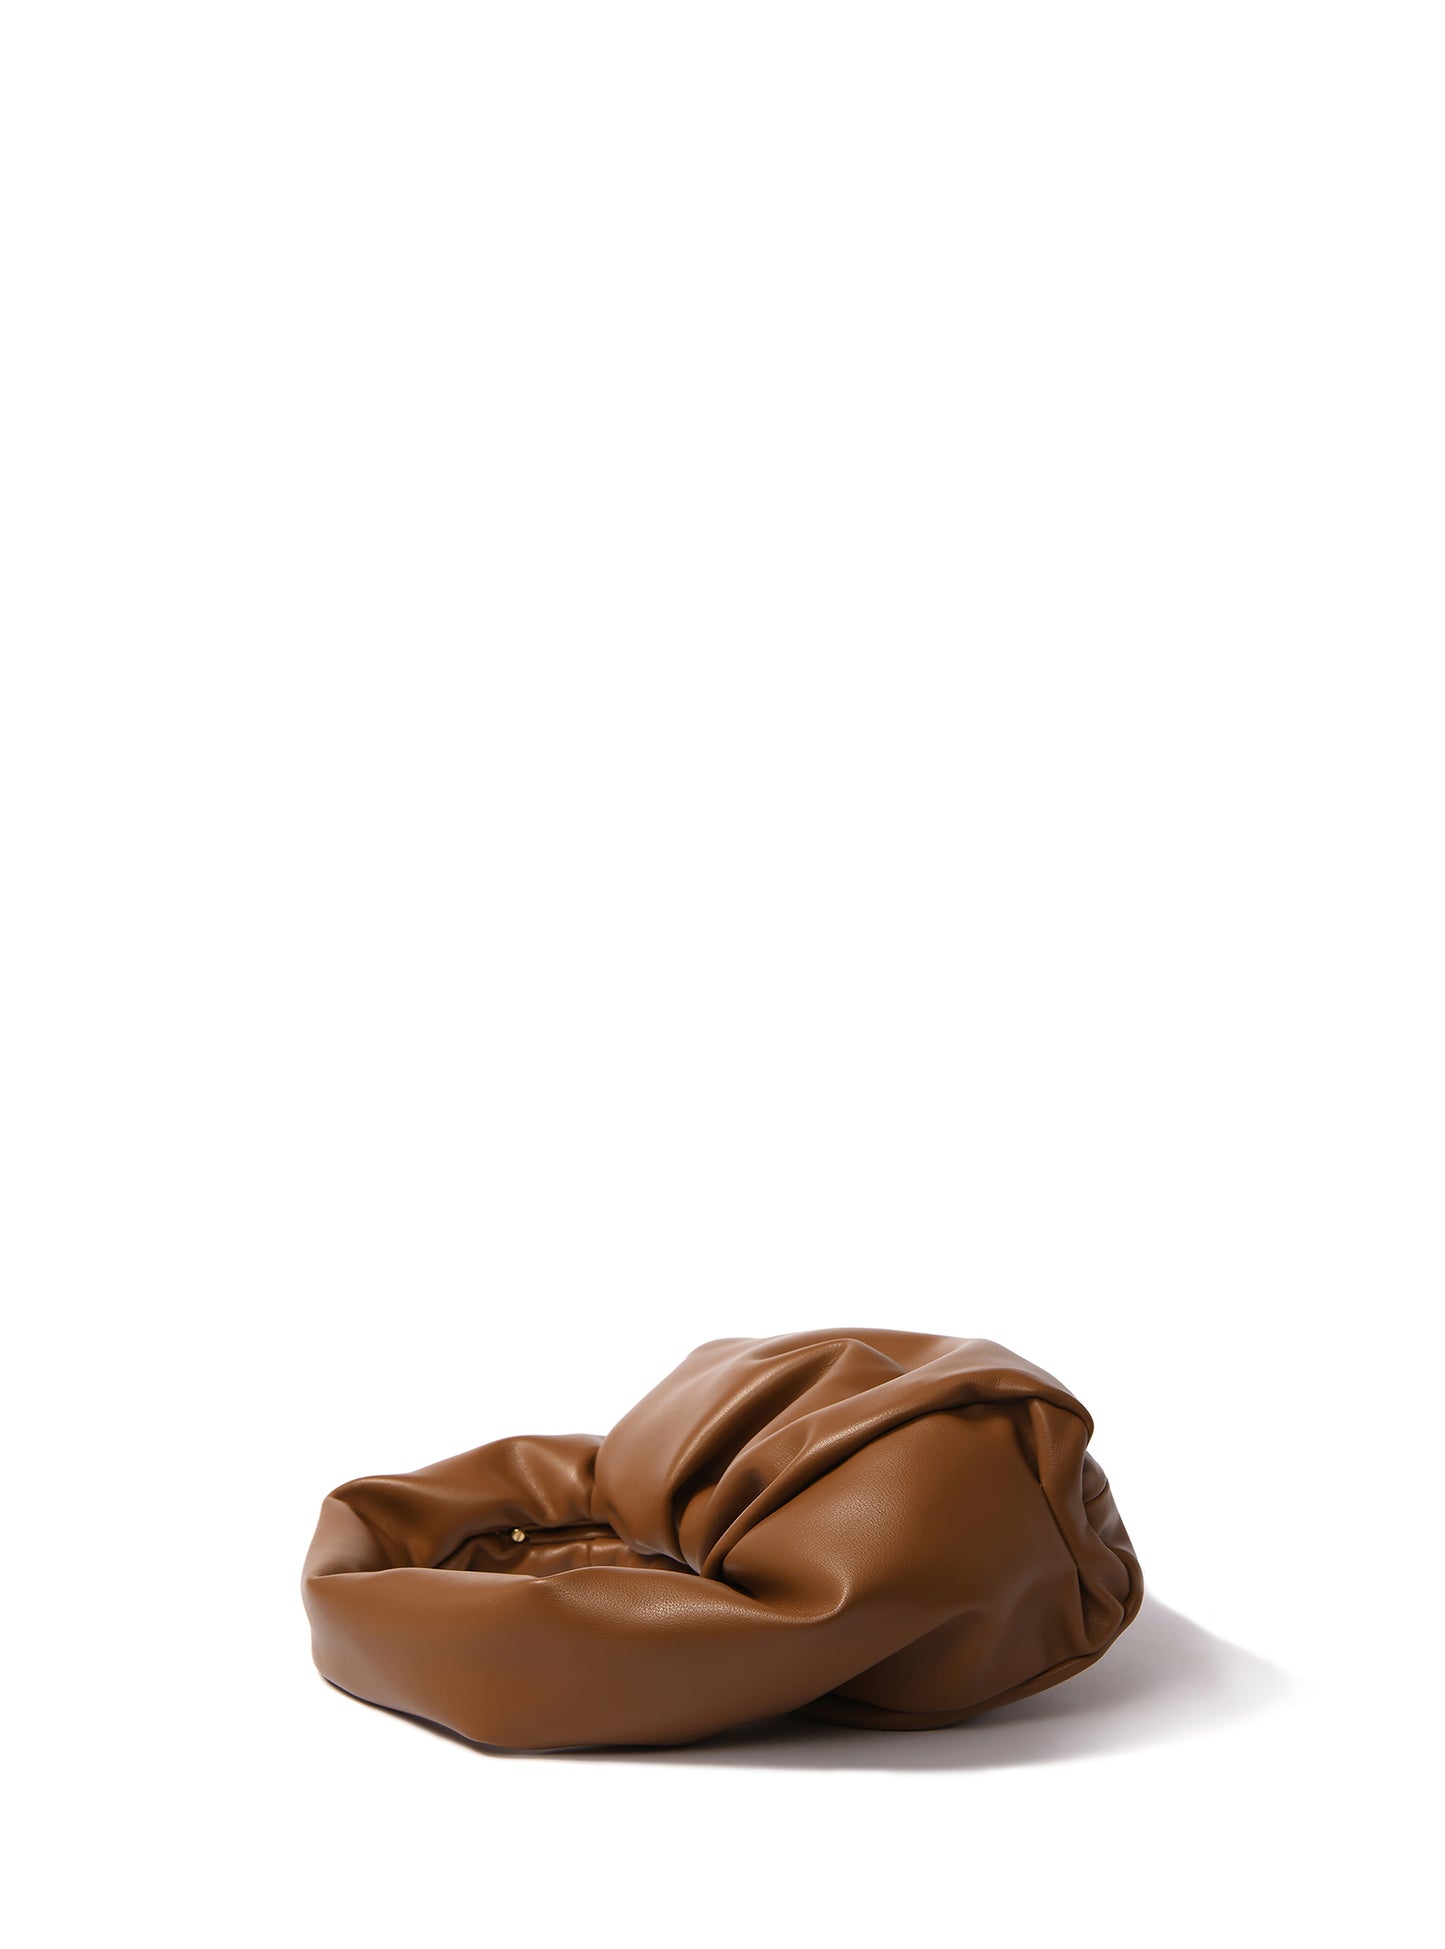 Marshmallow Croissant Bag in Soft Leather, Caramel – Bob Oré